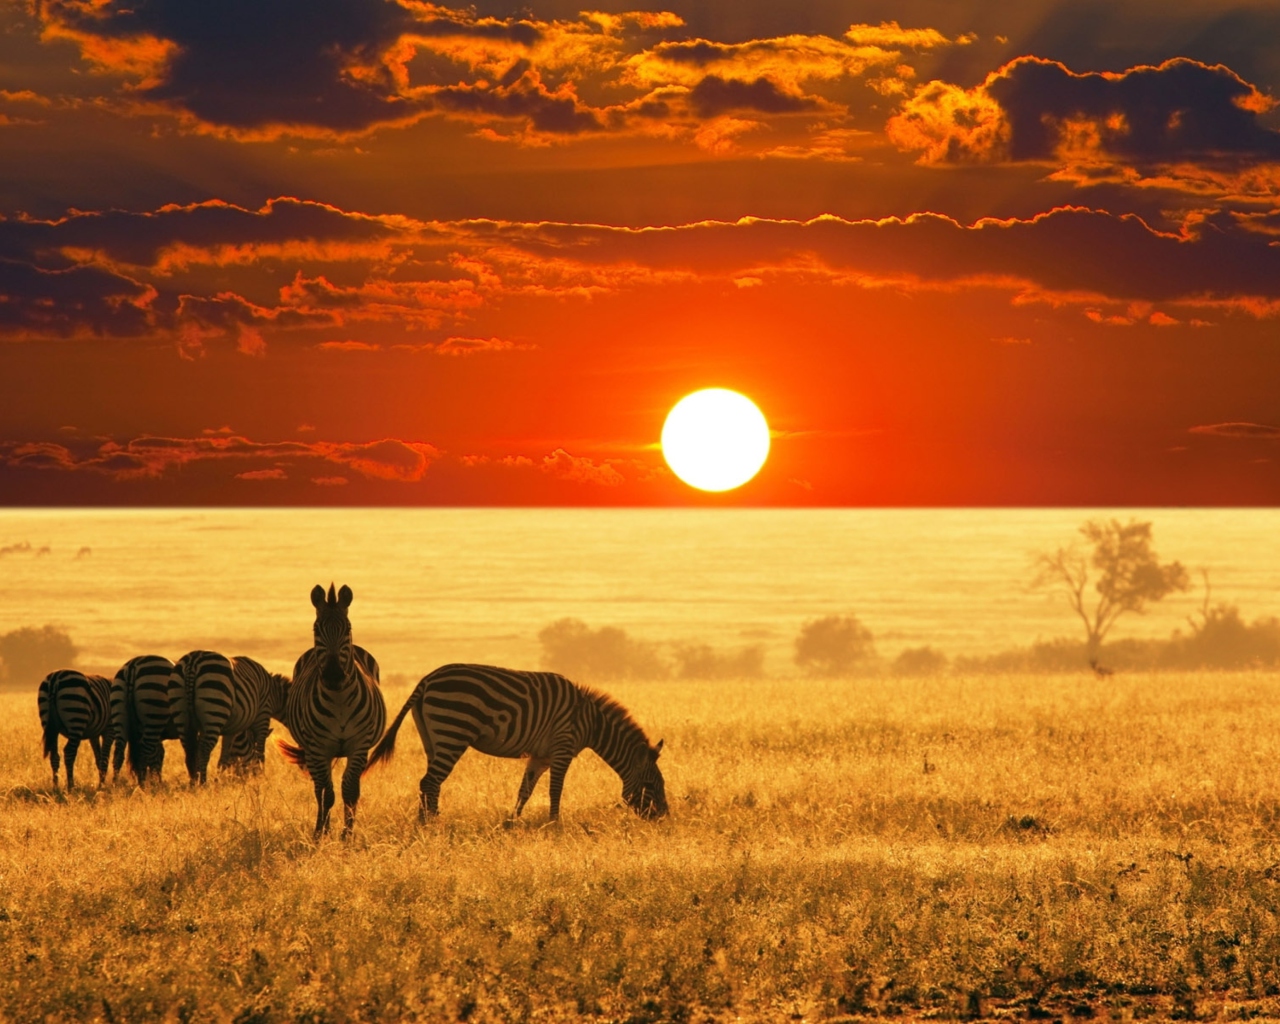 Обои Zebras At Sunset In Savannah Africa 1280x1024